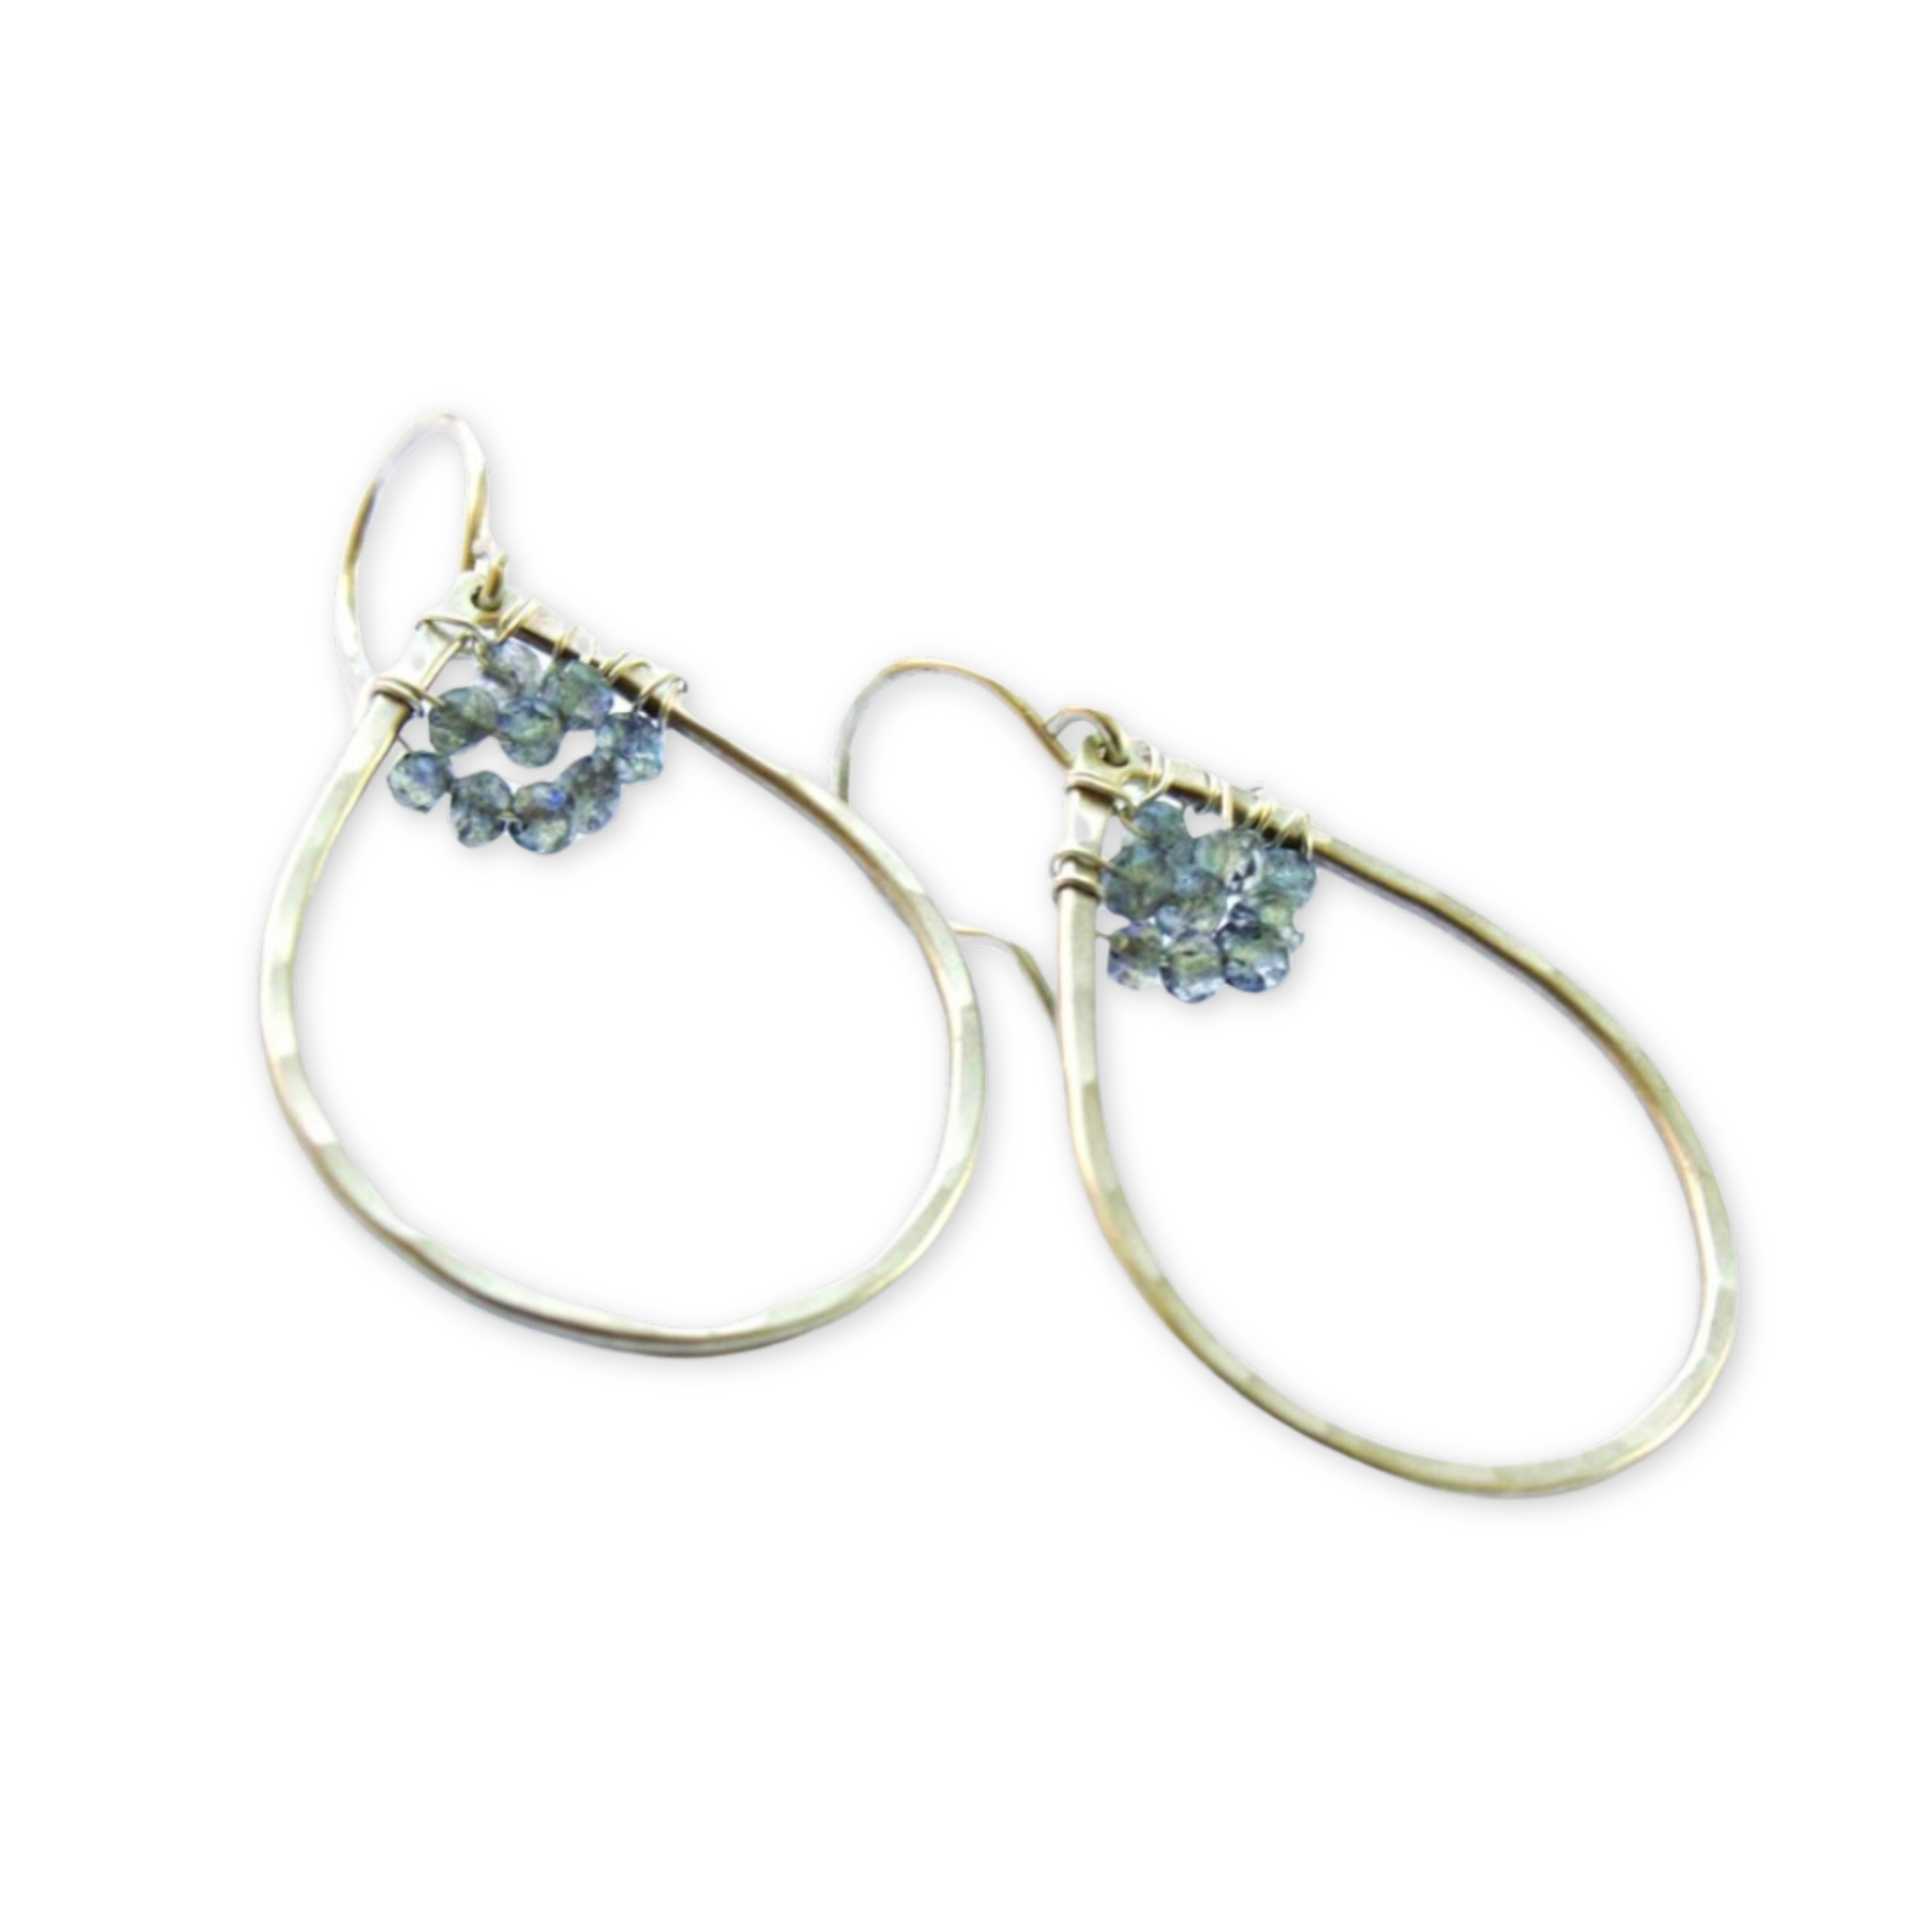 hammered teardrop earrings with labradorite stones